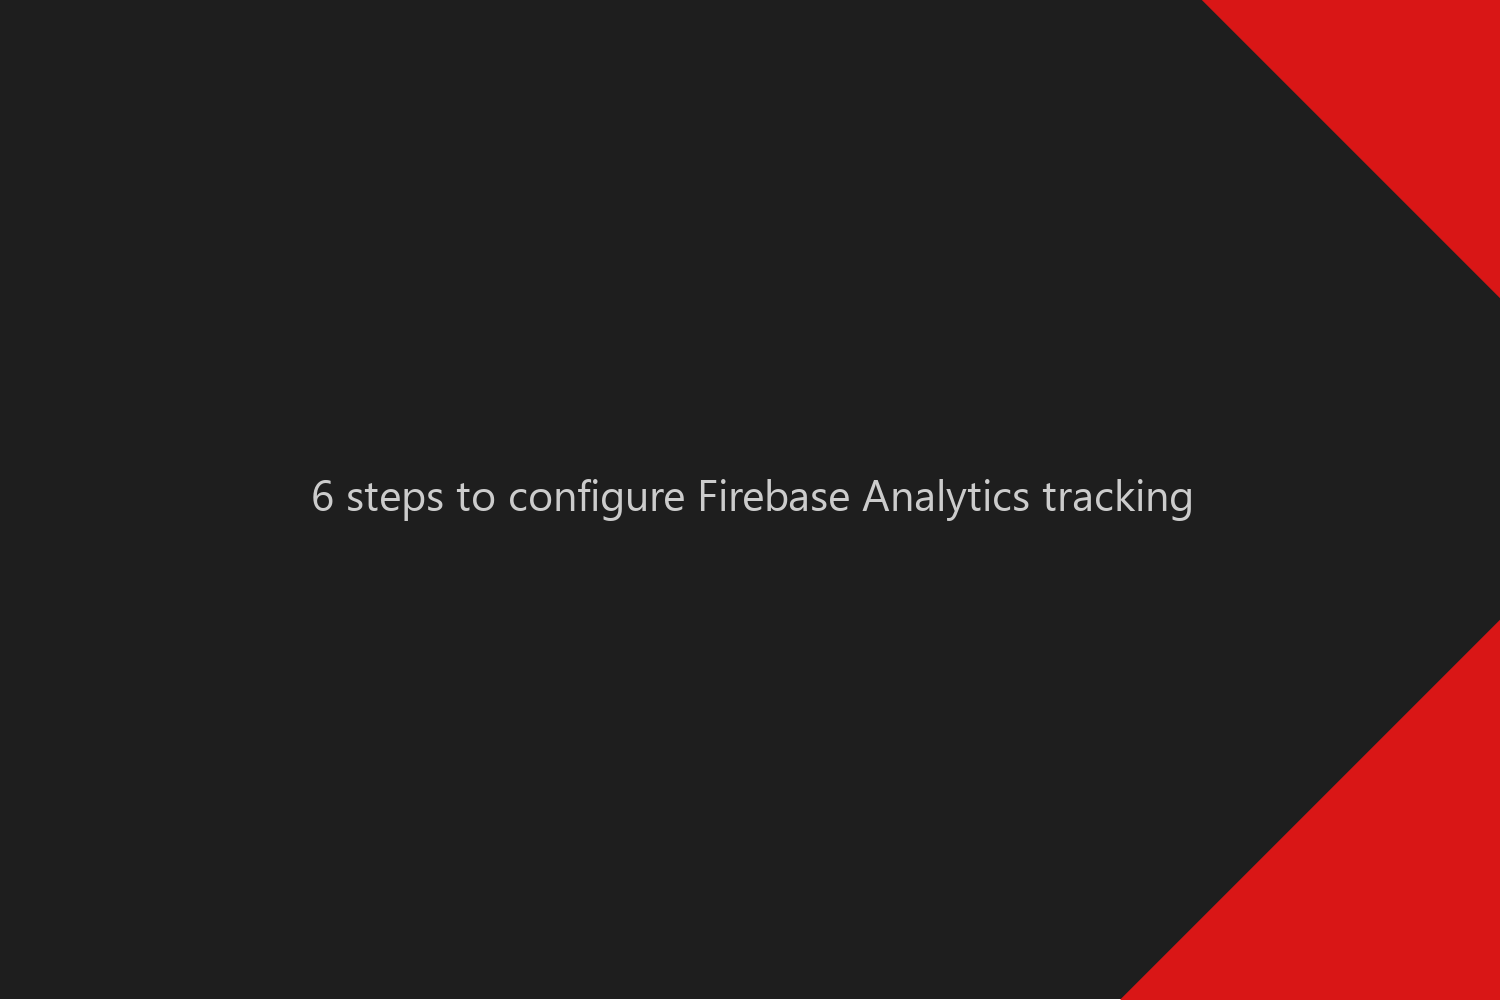 6 steps to configure Firebase Analytics tracking